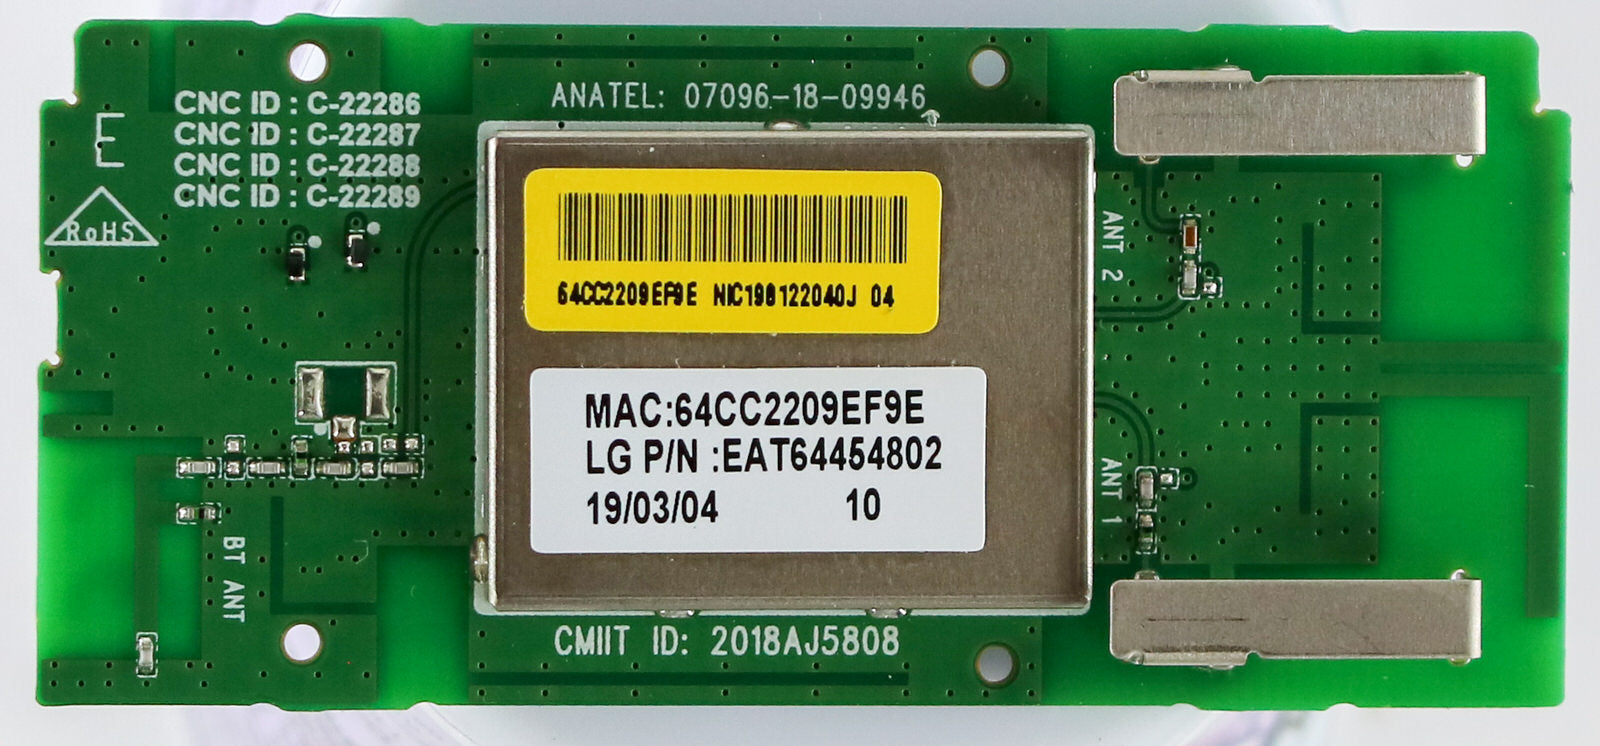 LG EAT64454802 WI-FI Module